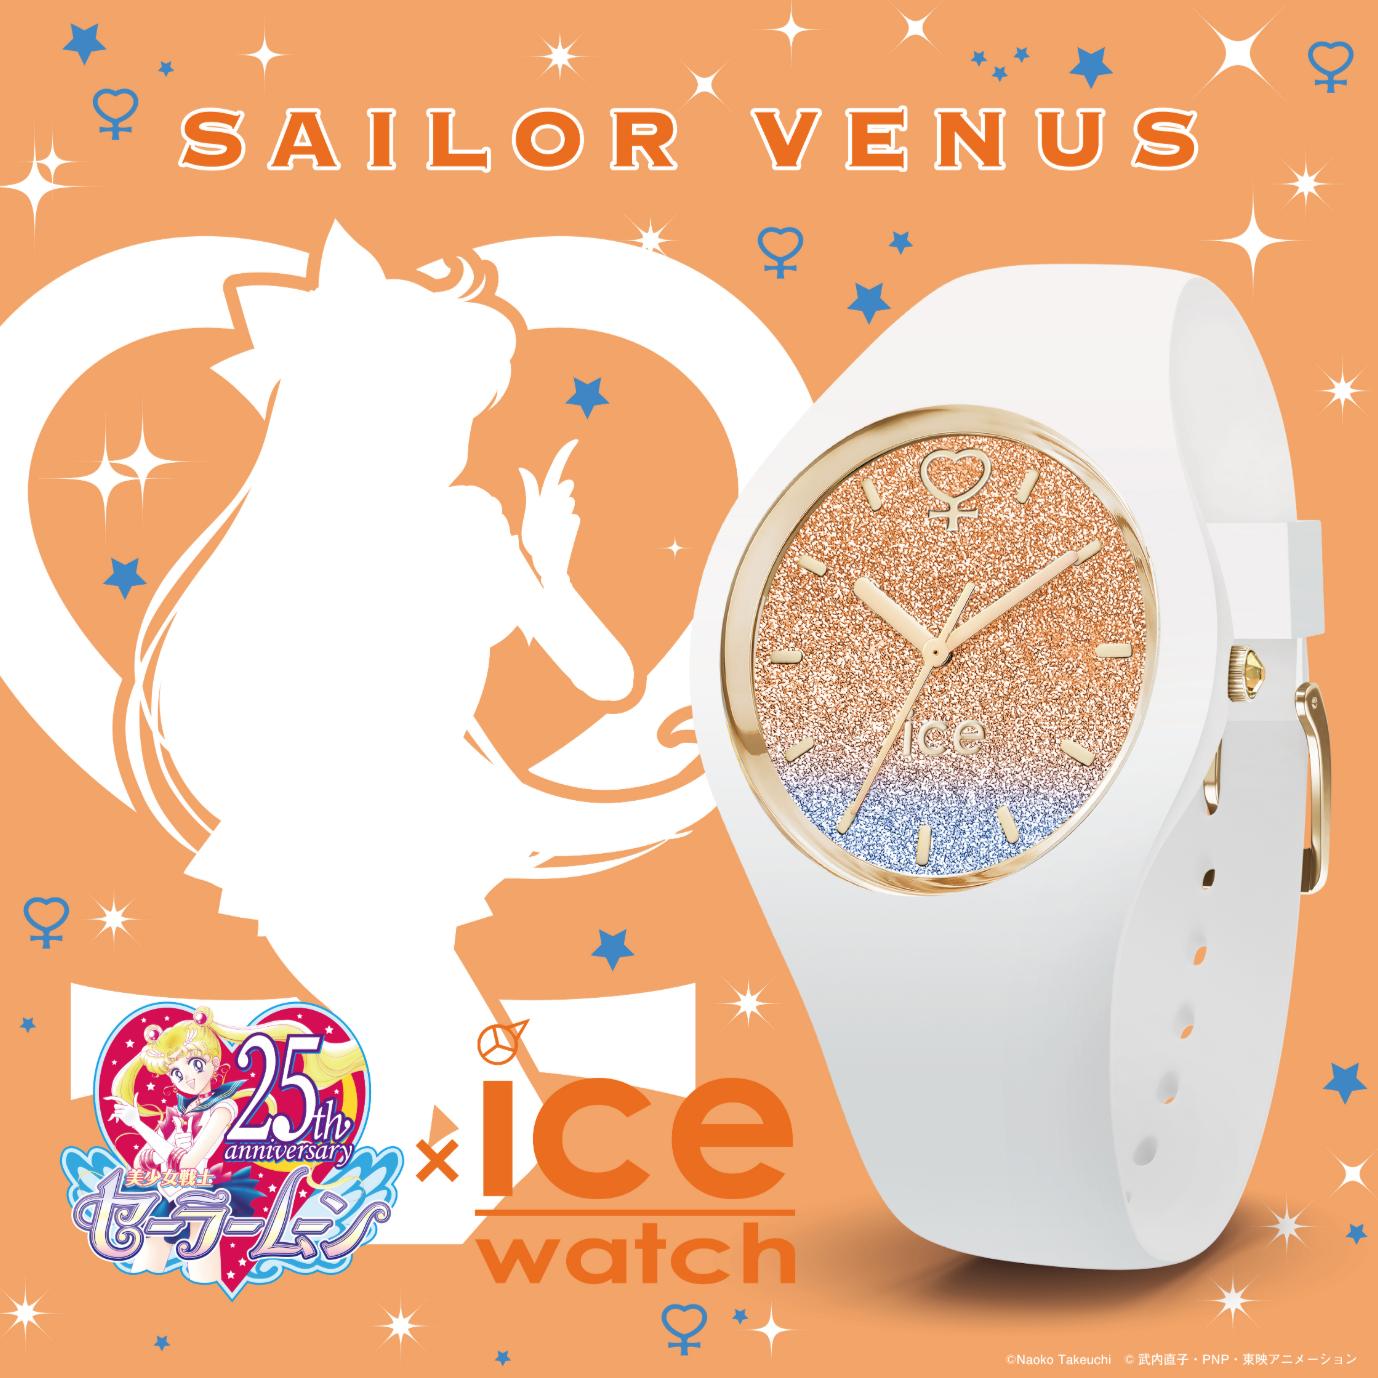 Sailor Moon Ice Watch Collaboration - Sailor Venus